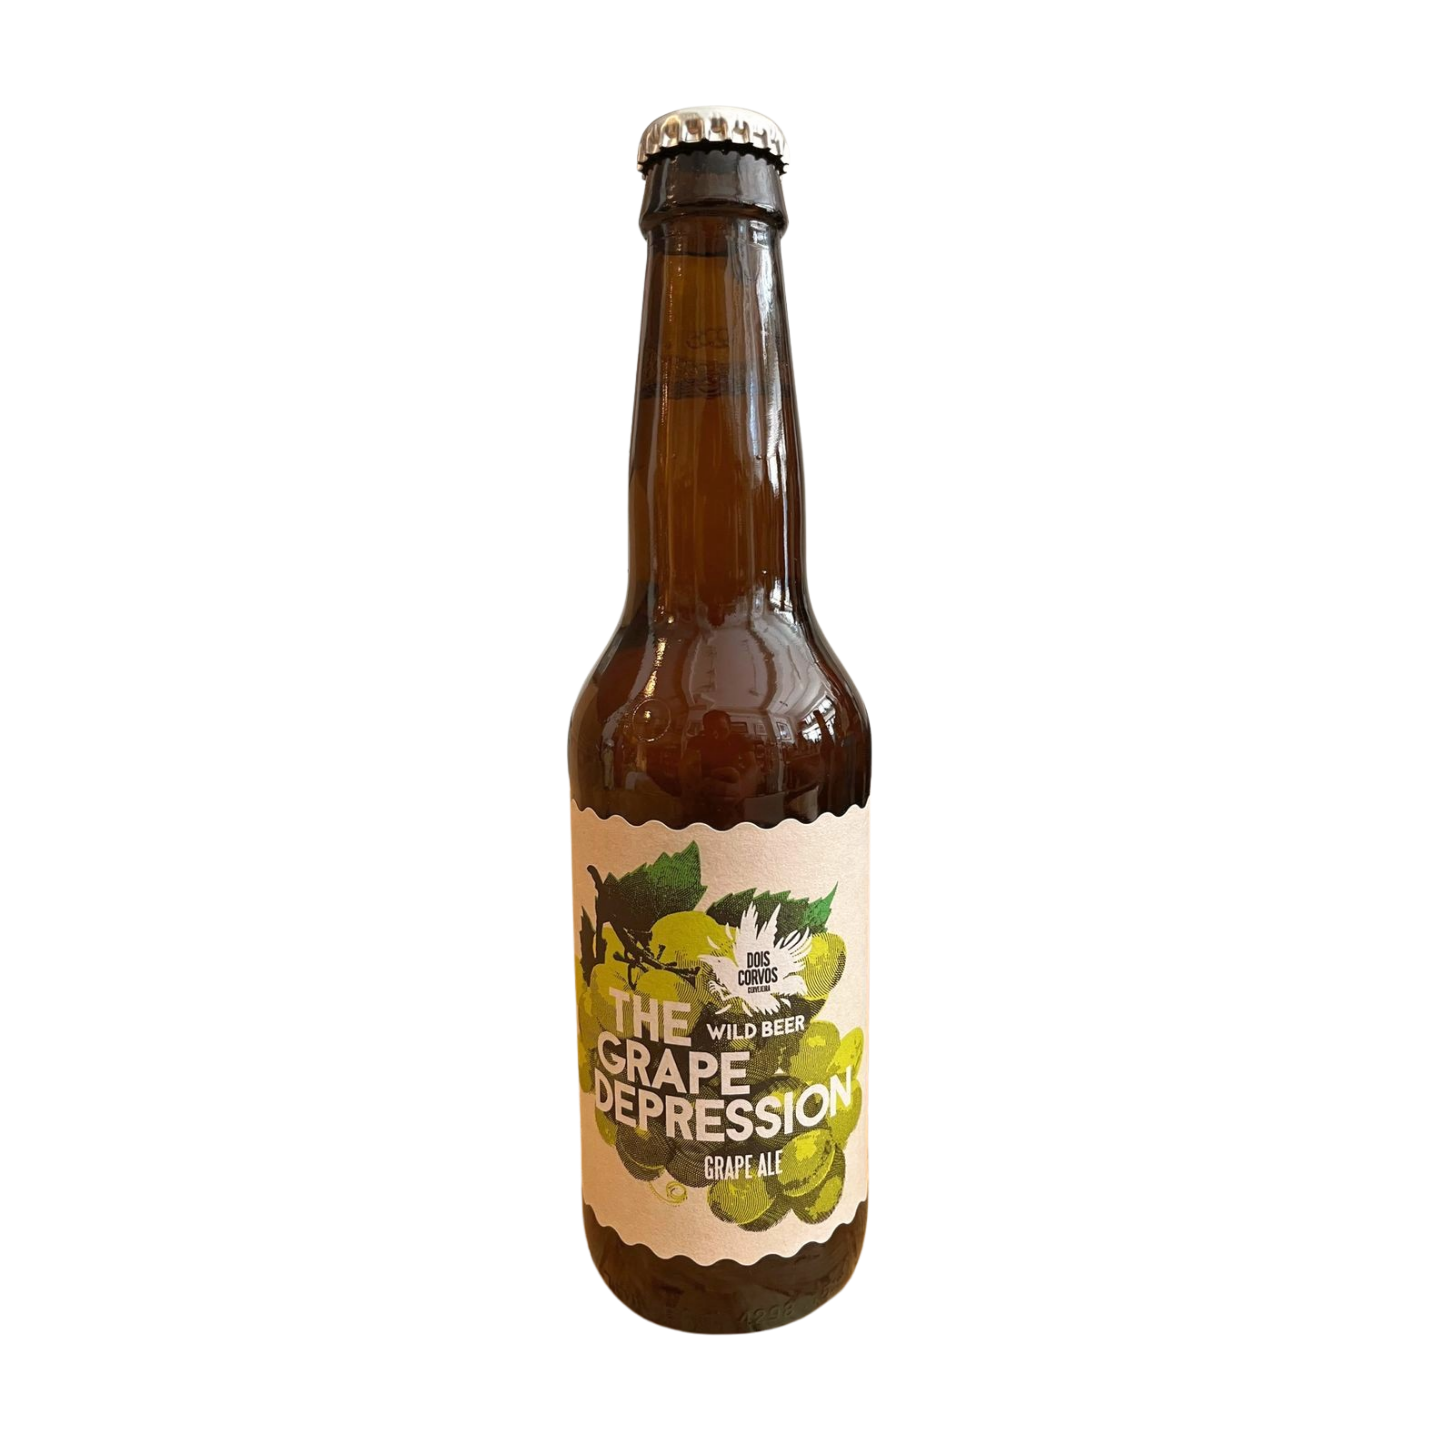 Dois Corvos - The Grape Depression - Wild Beer Grape Ale 33cl